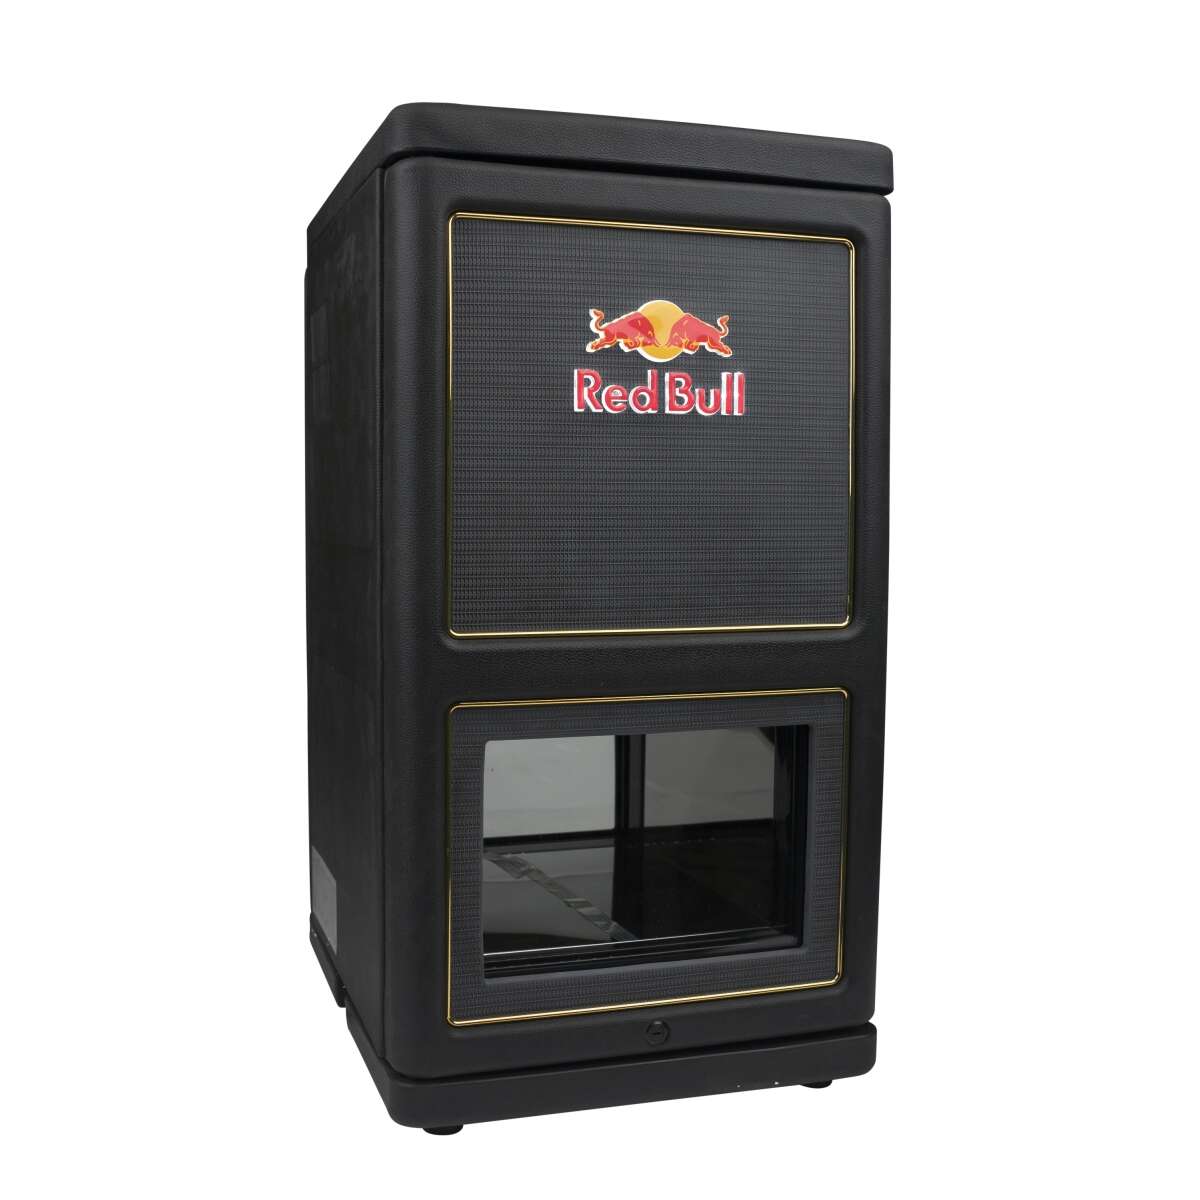 Red Bull Kühlschrank